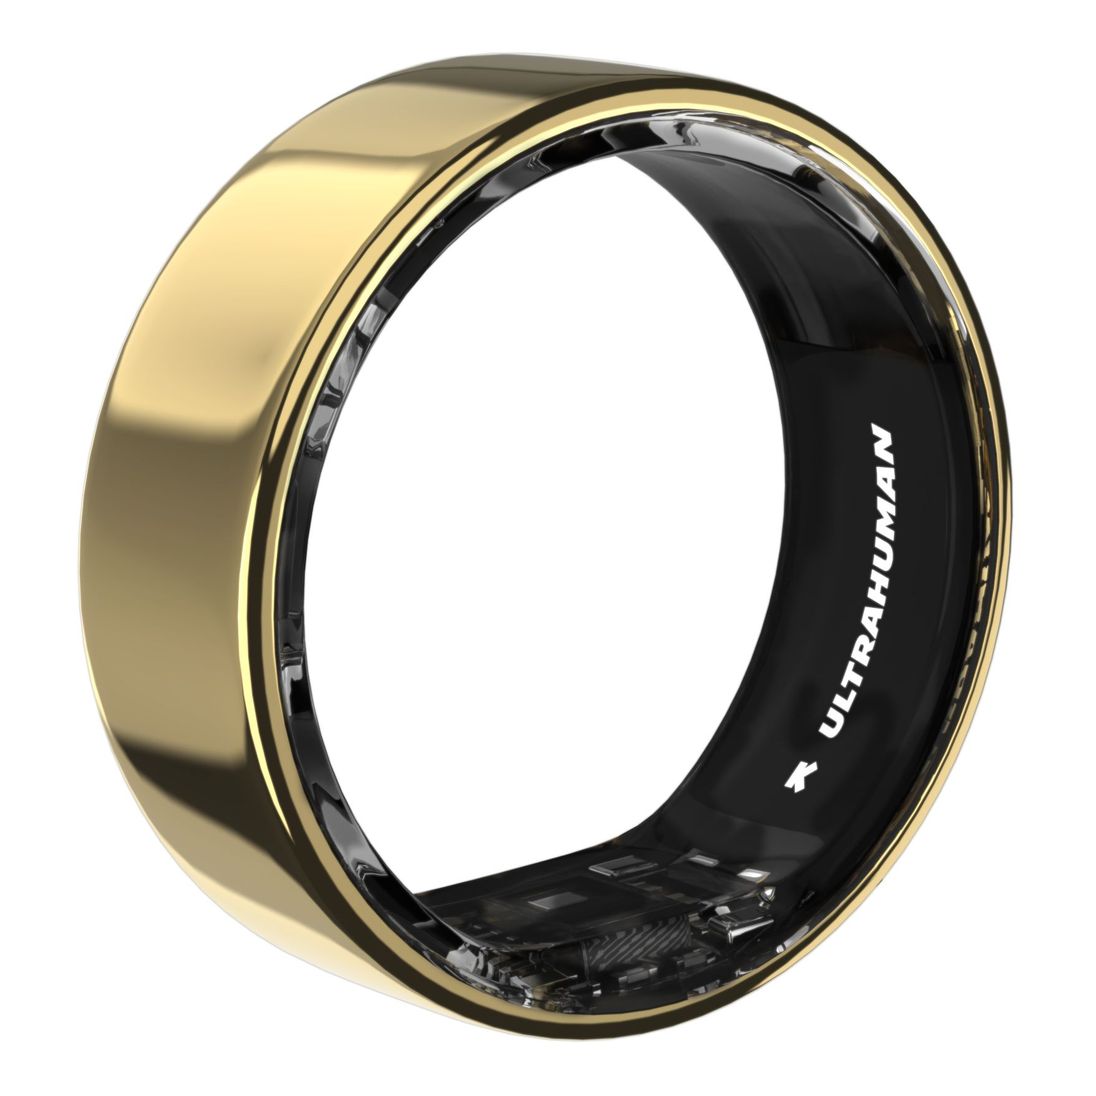 Ultrahuman Ring AIR Smart Ring - Size 14 - Bionic Gold